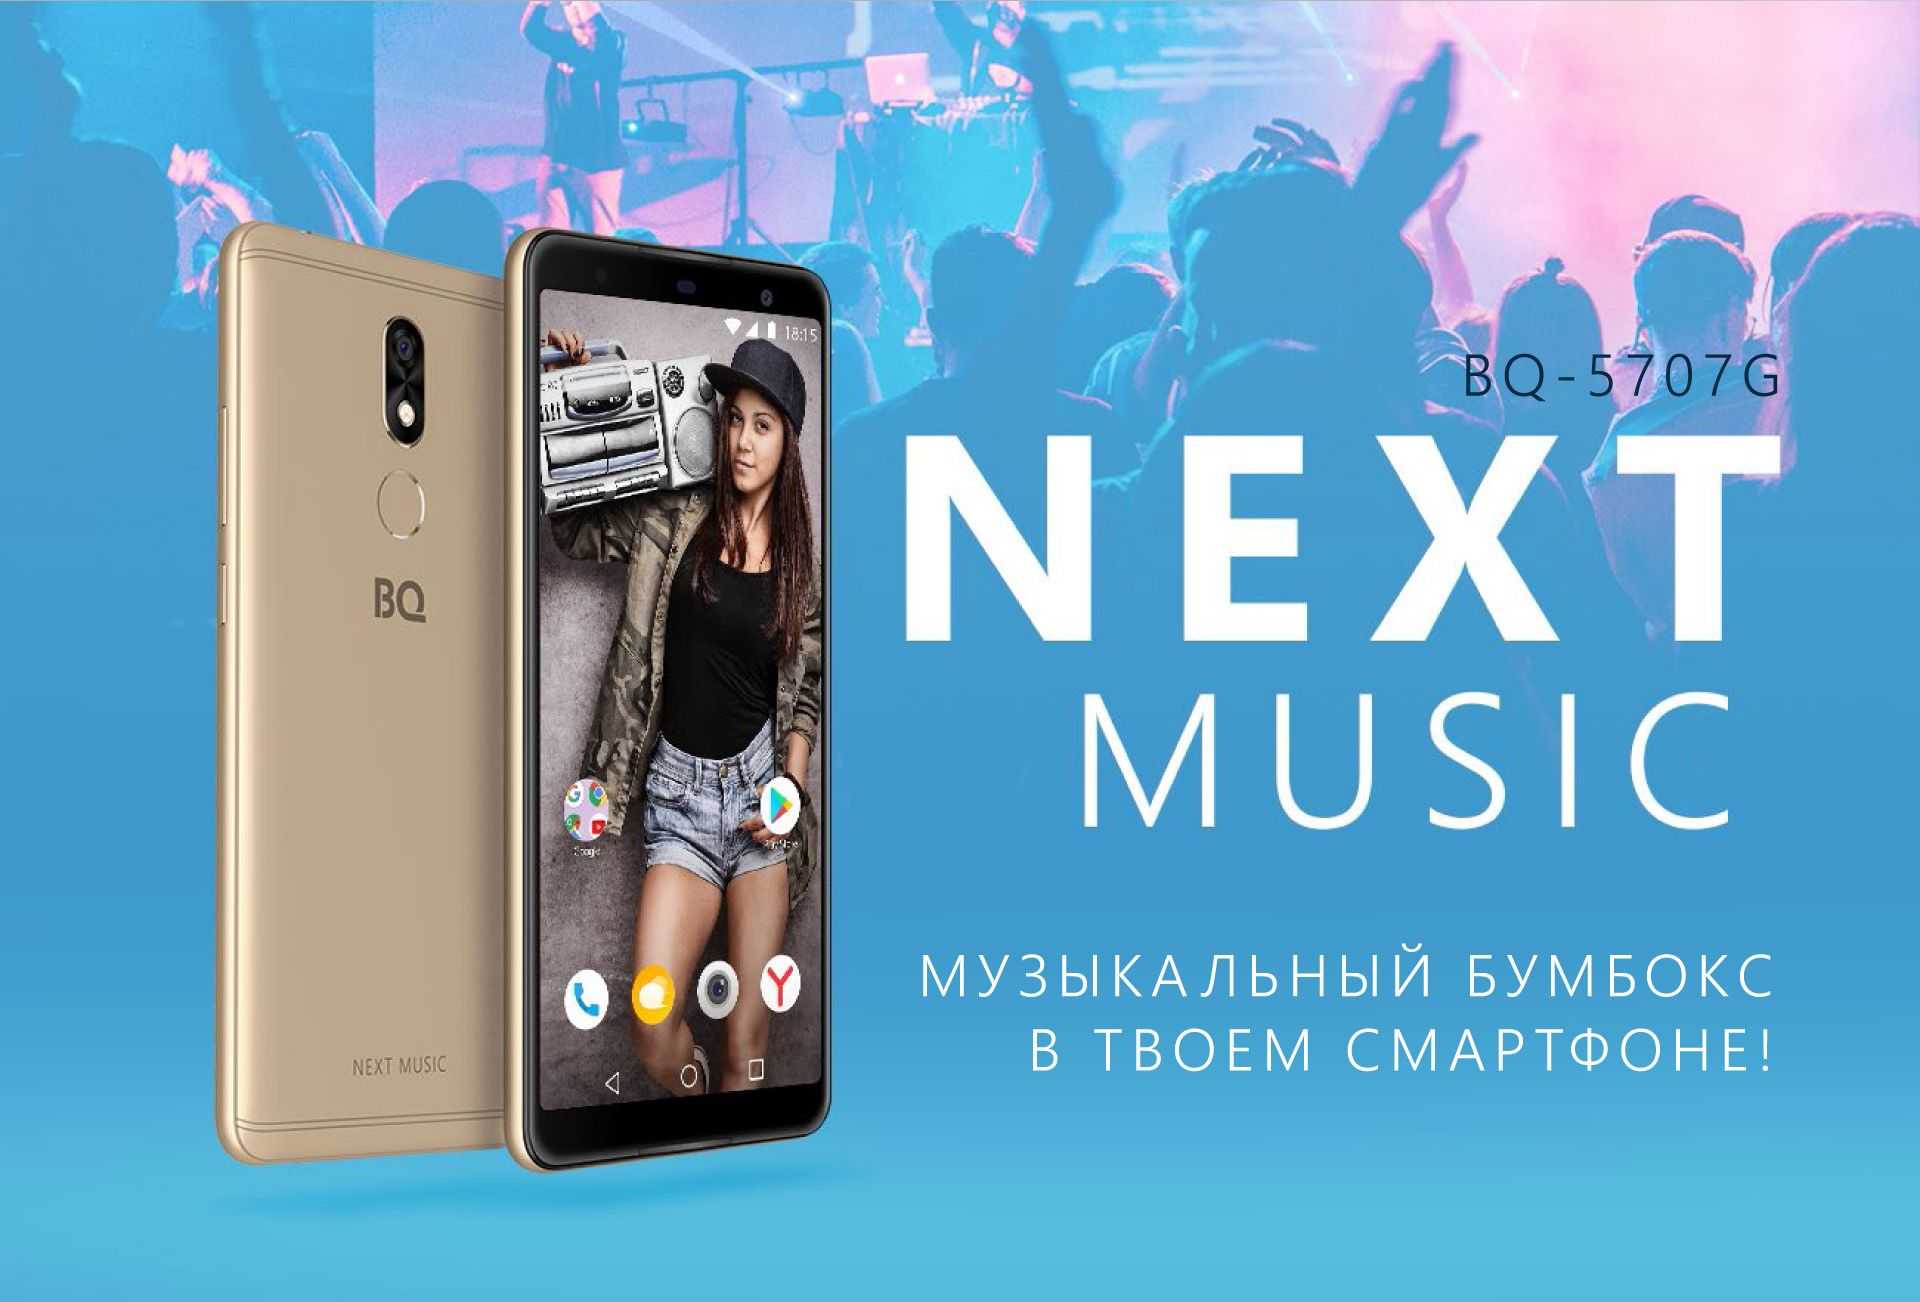 Bq-5707g next music – недорогой смартфон со стереозвуком | hwp.ru